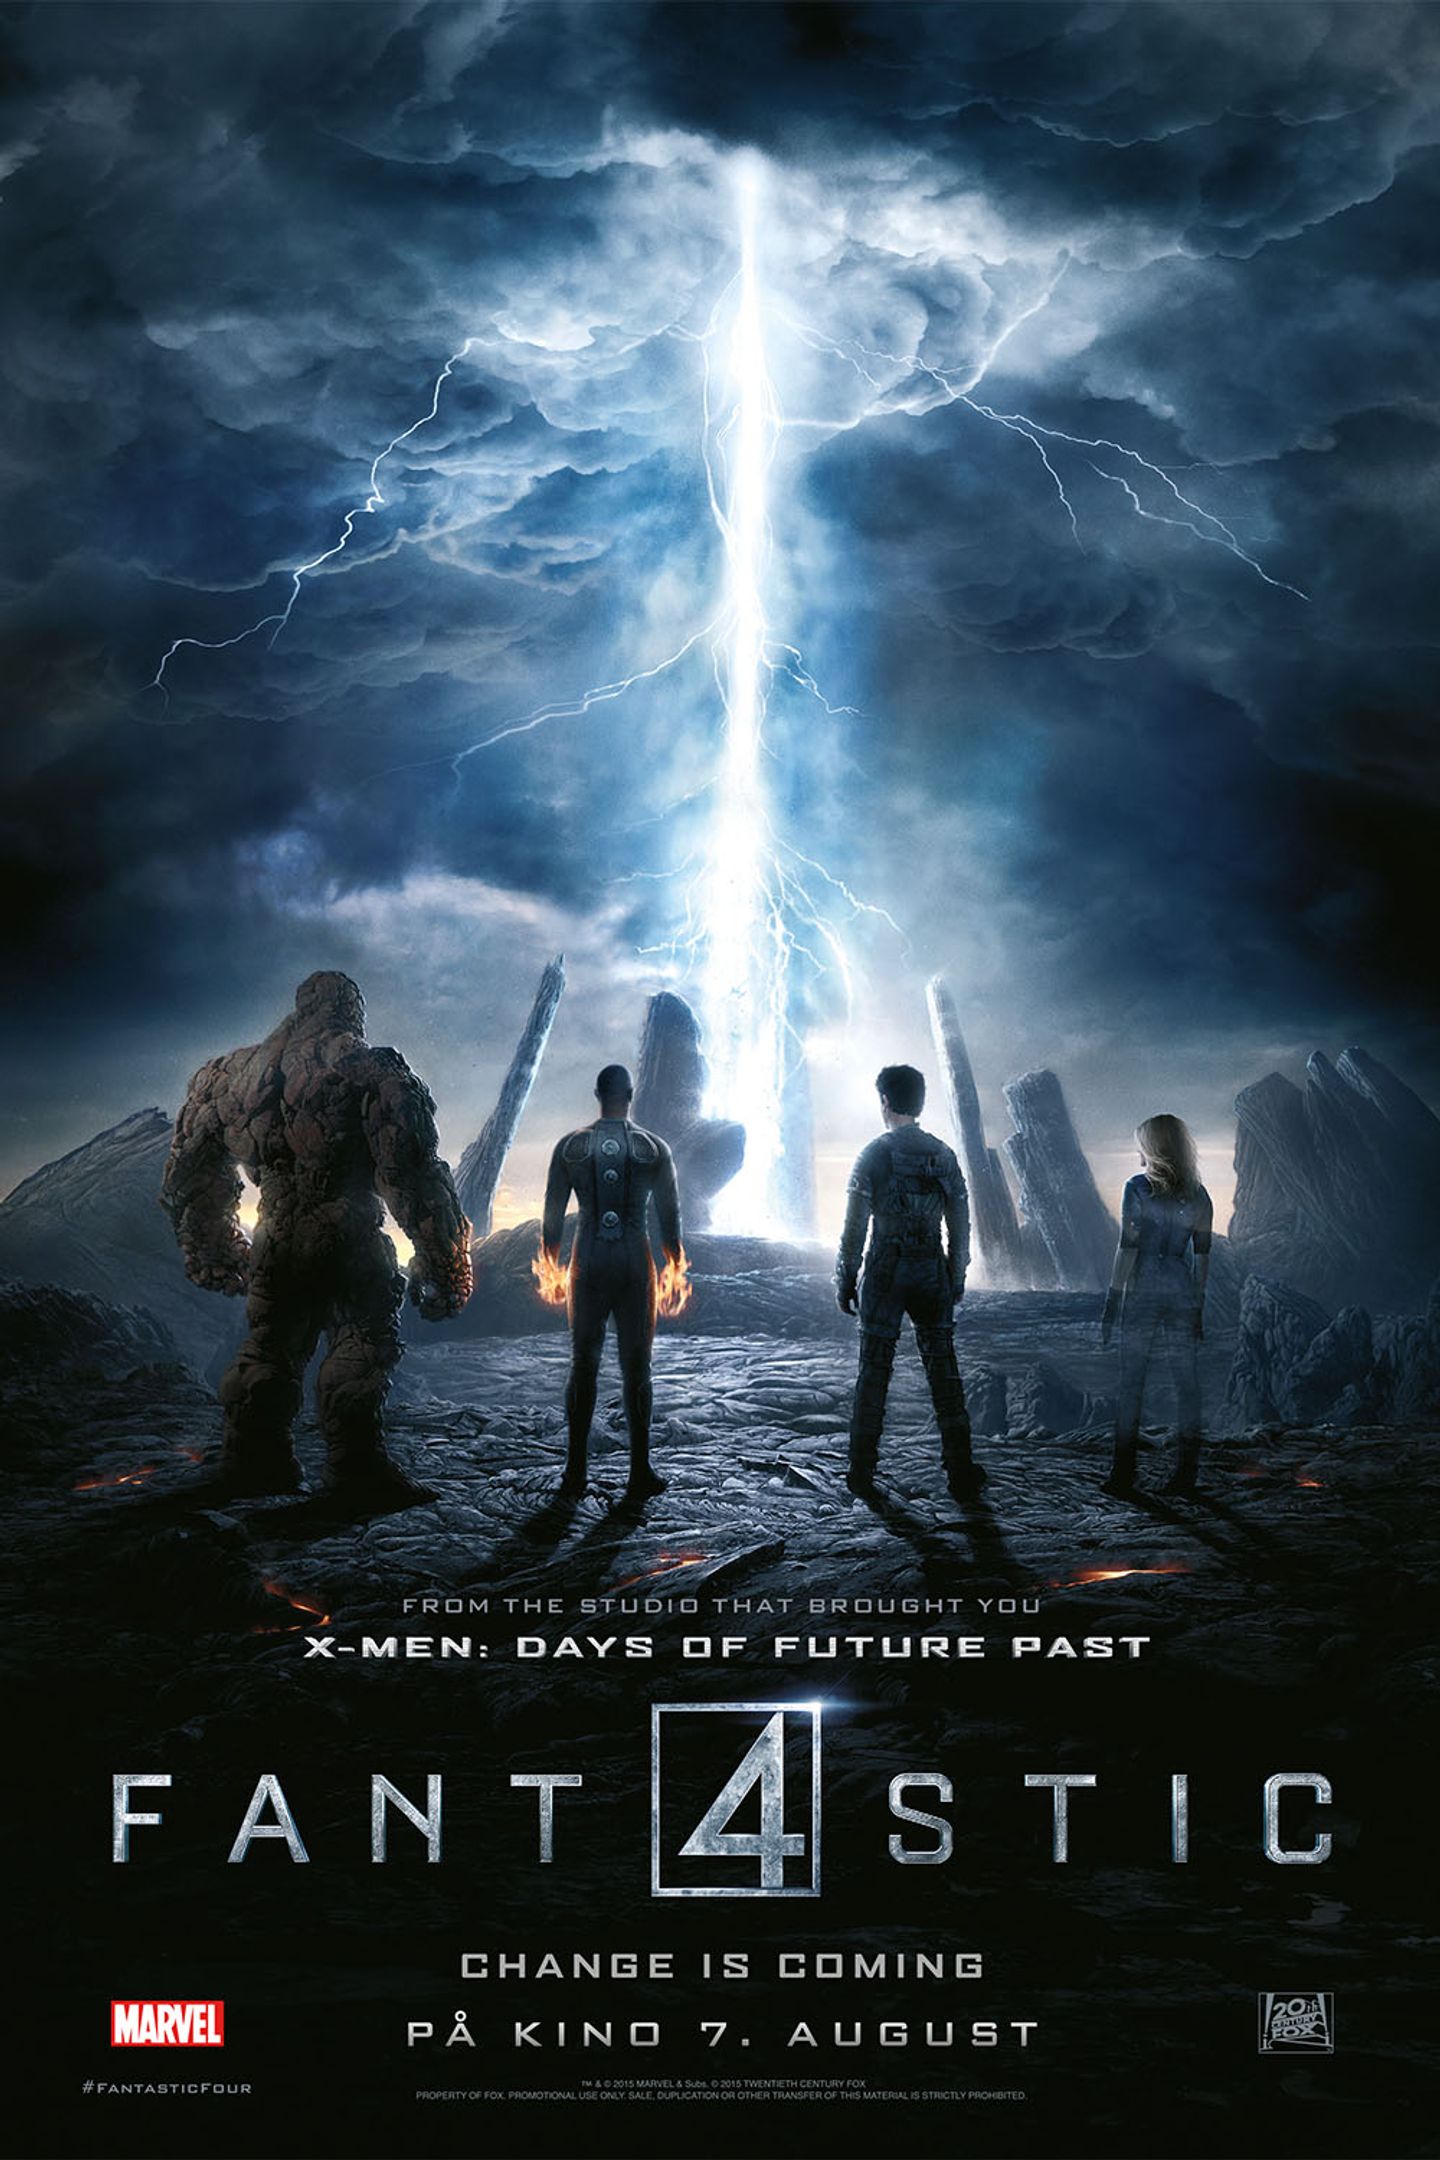 Plakat for 'Fantastic Four'